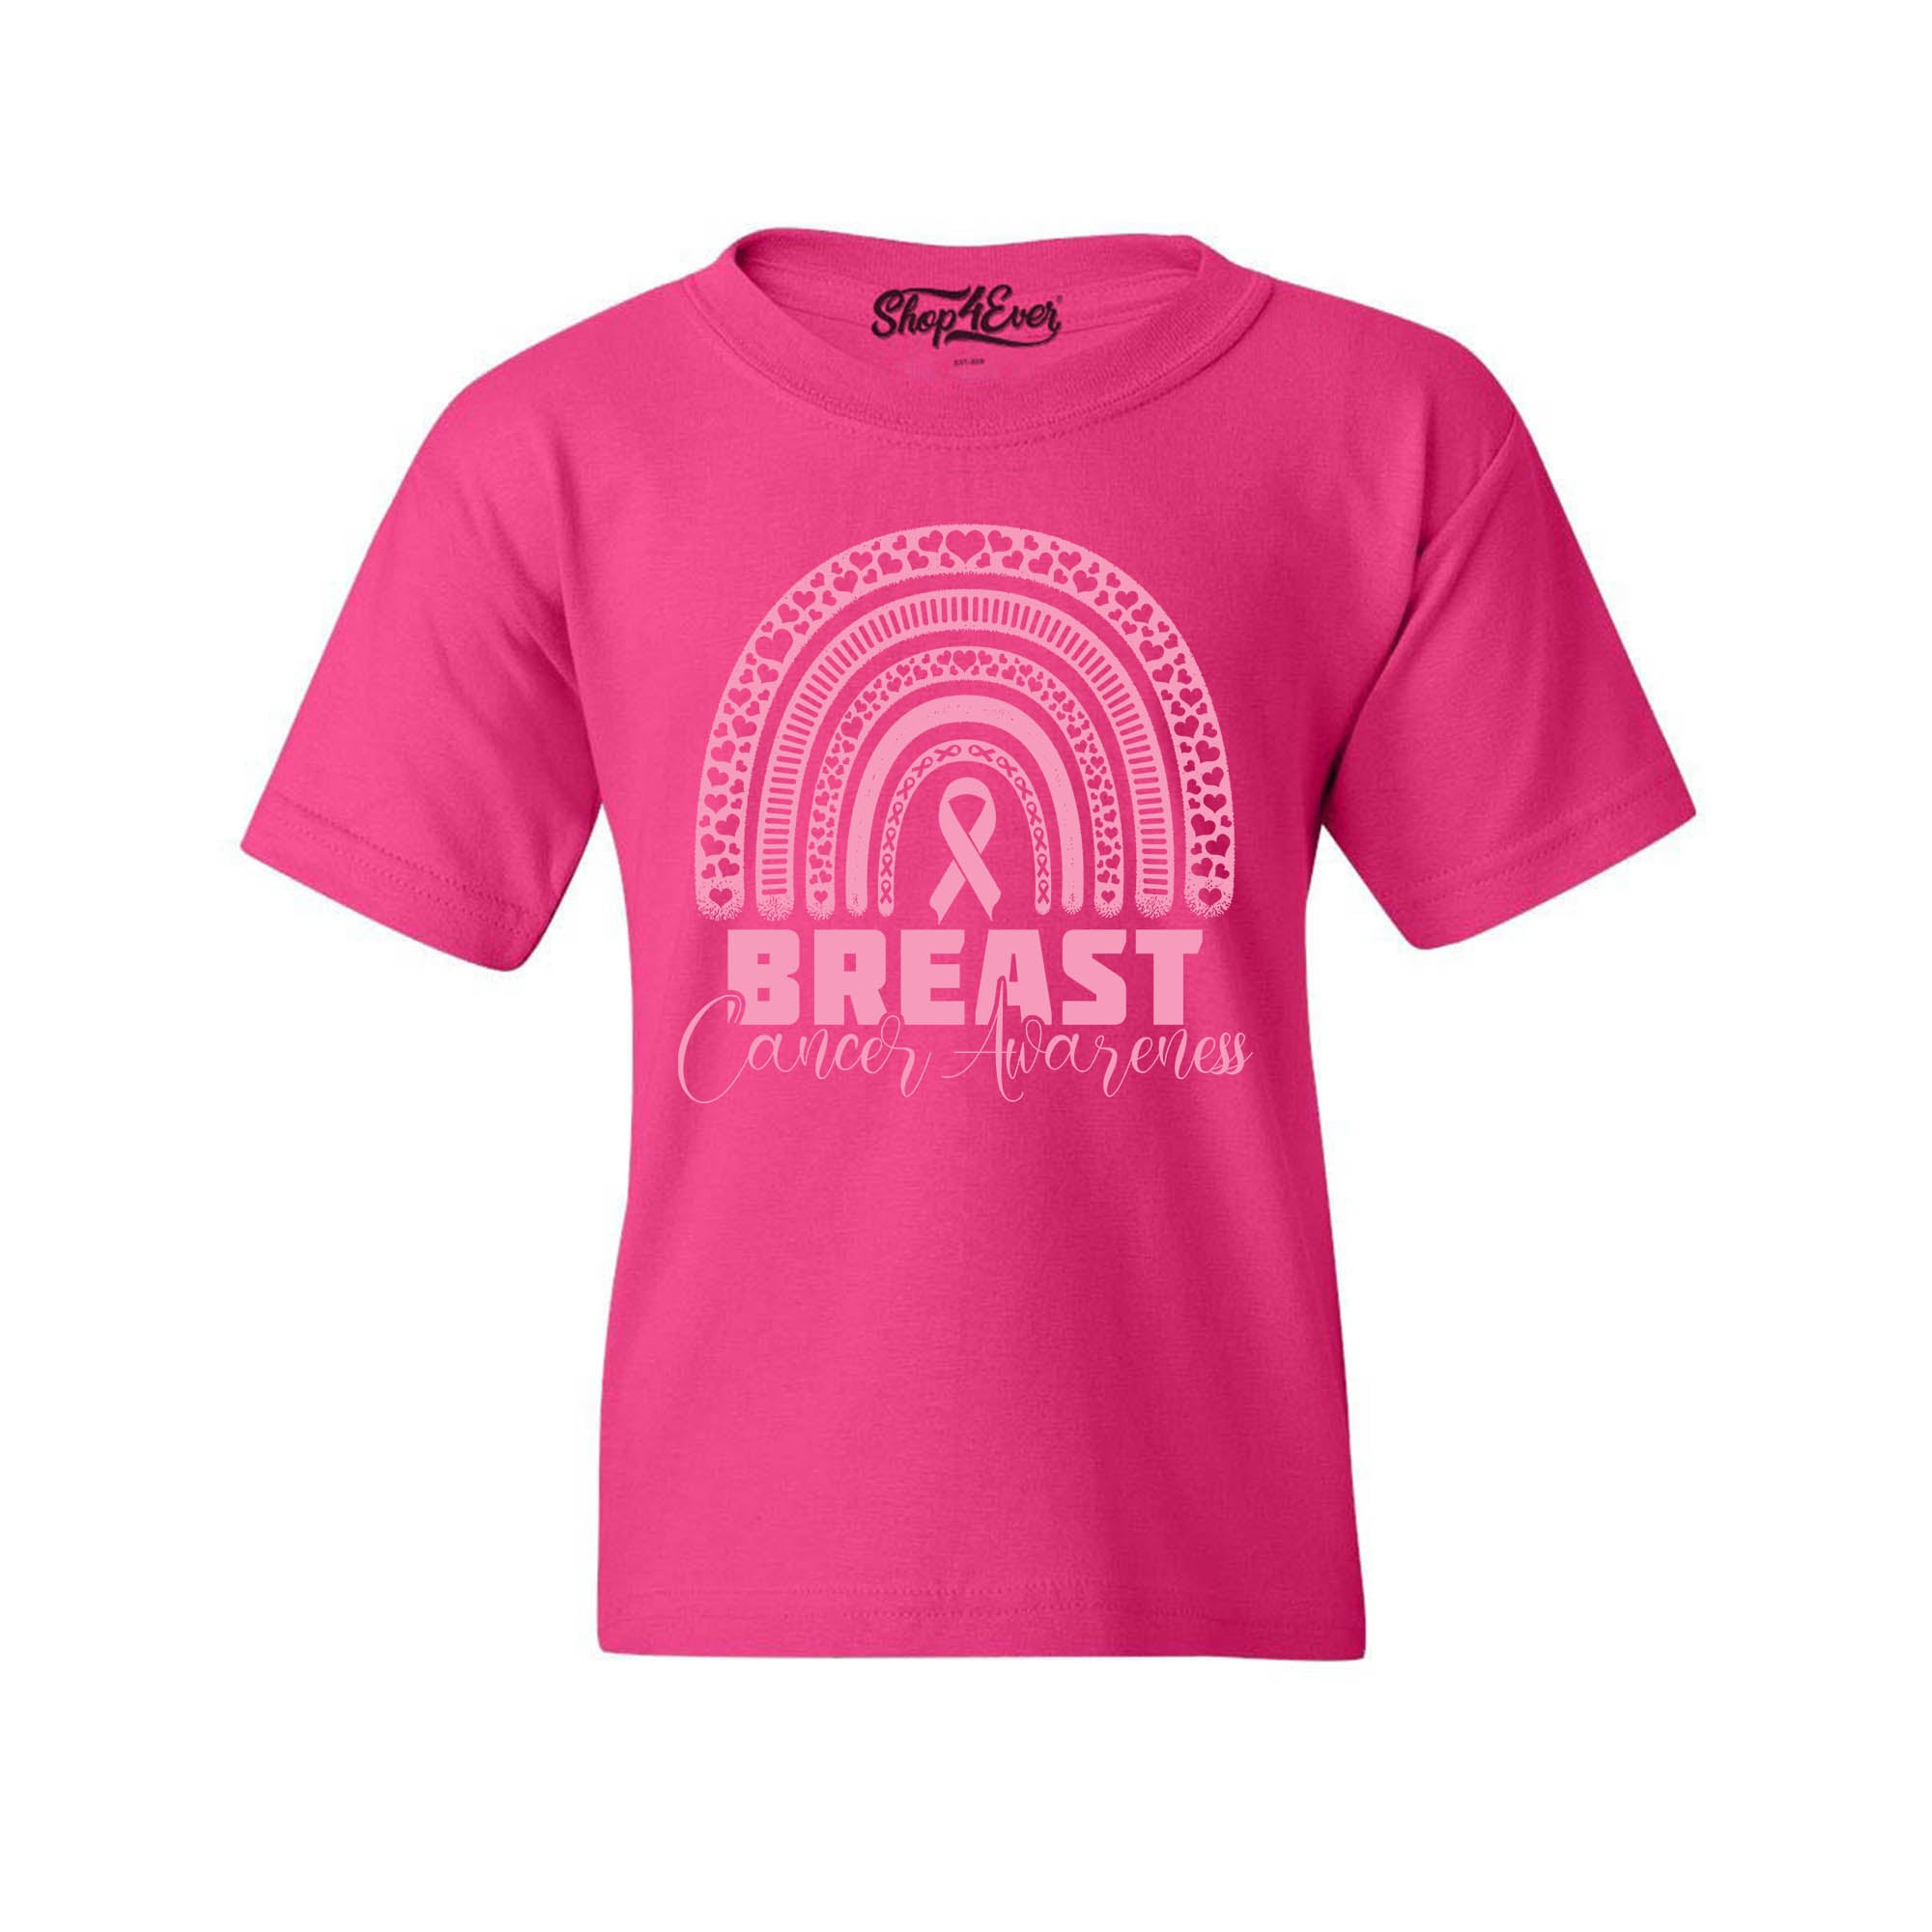 Breast Cancer Awareness Rainbow Child's T-Shirt Kids Tee